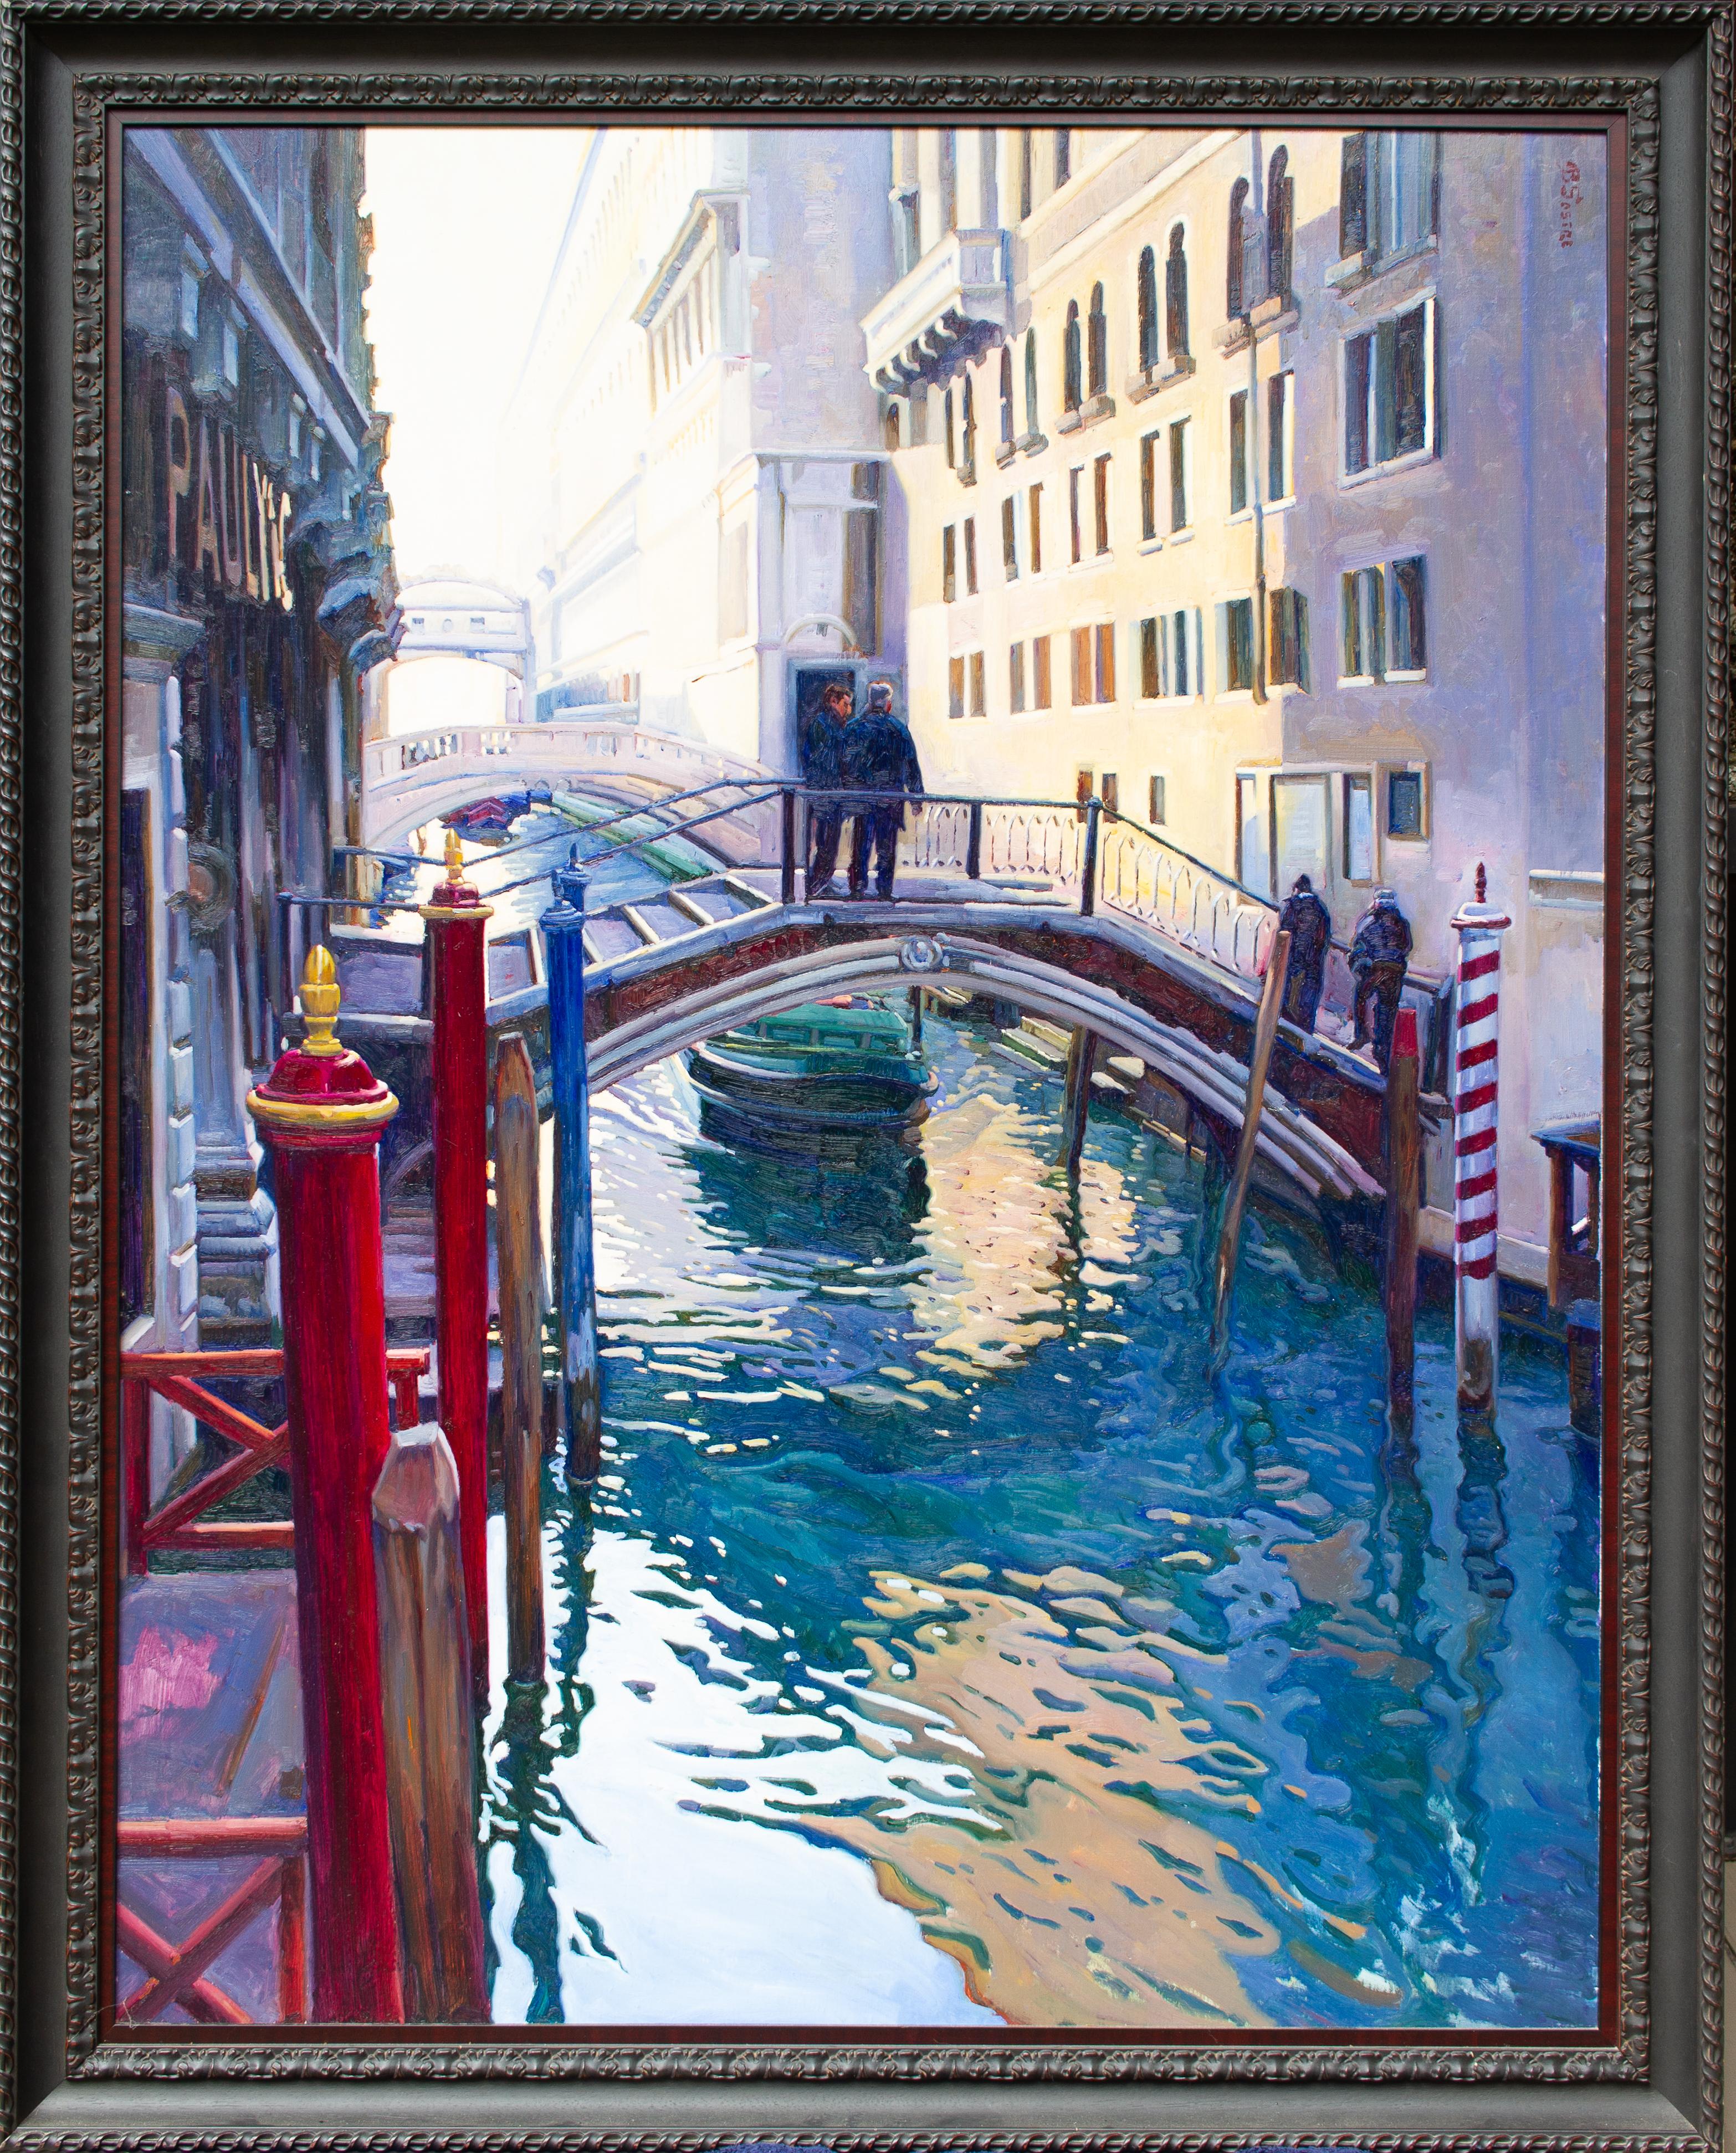 Venecia - Painting de Bartolome Sastre